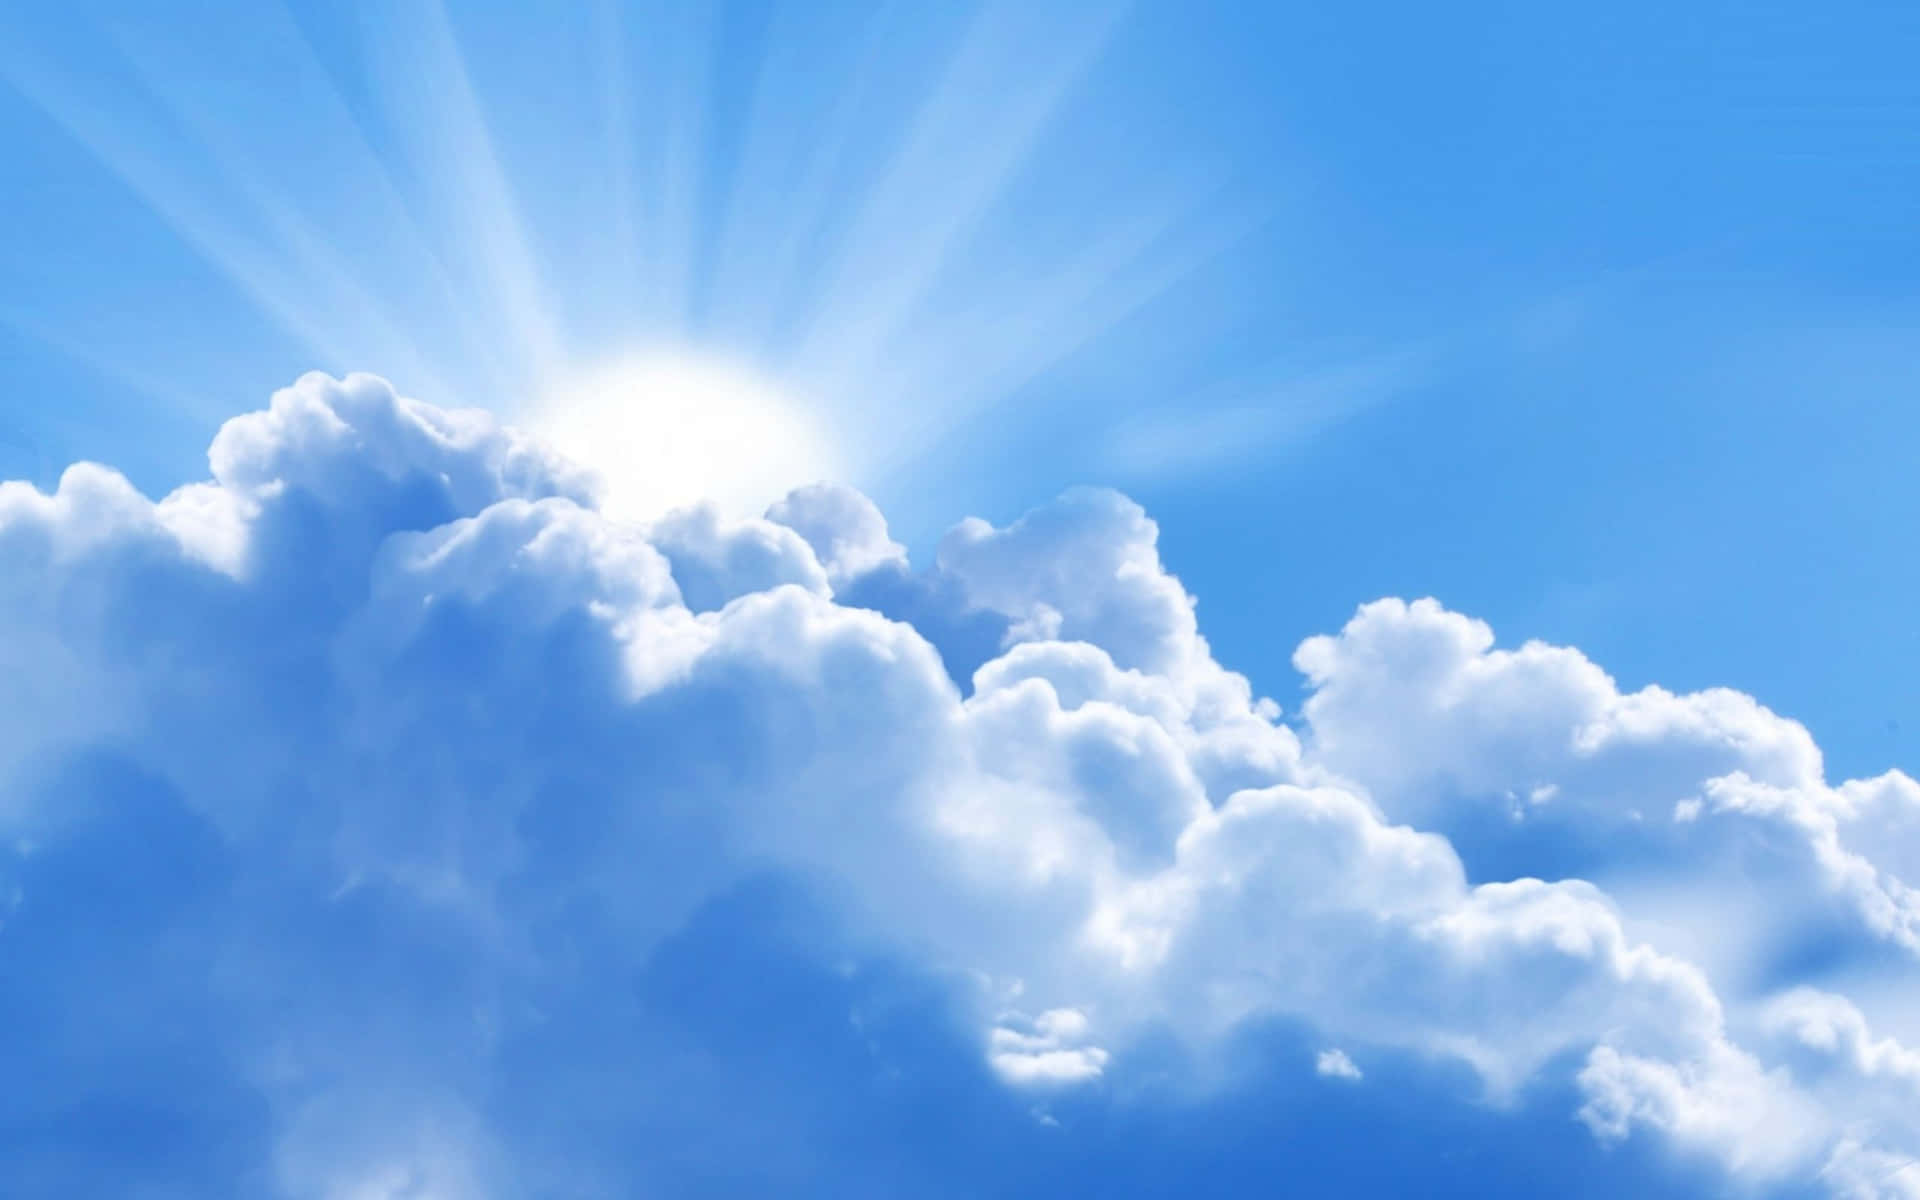 Formaciónde Nubes Imponentes Y Cielo Azul Como Fondo De Pantalla De Computadora O Móvil.